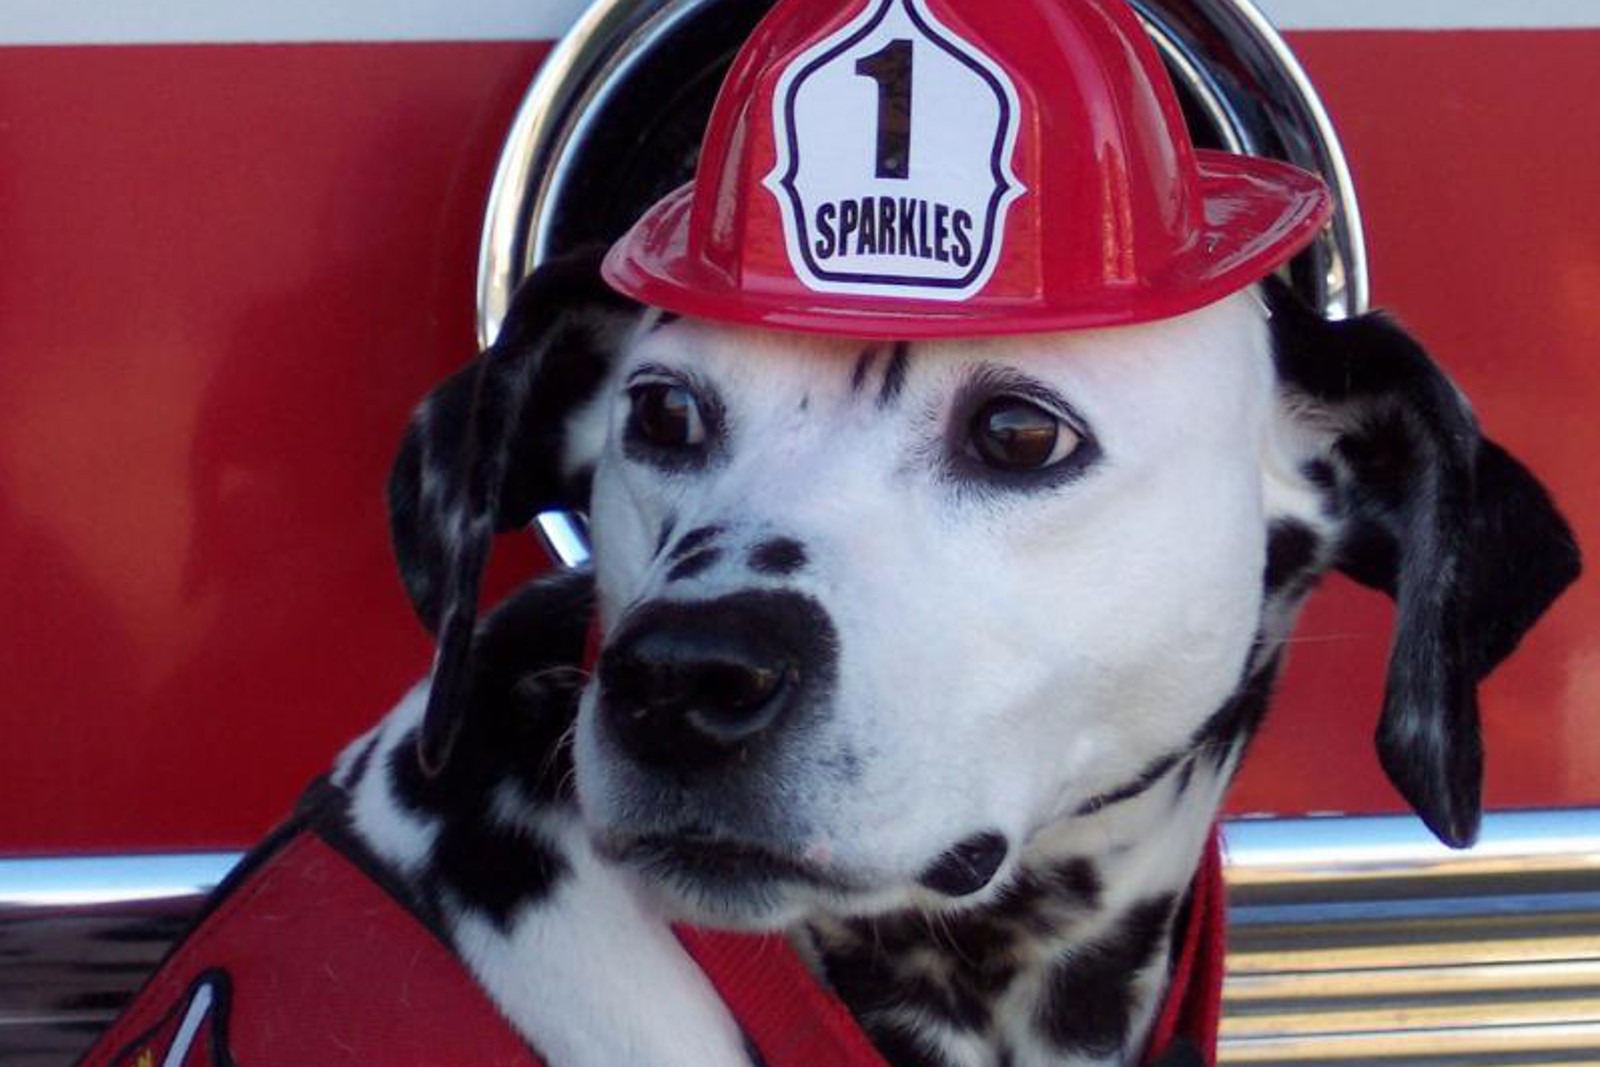 Sparkles_the_Fire_Safety_Dog